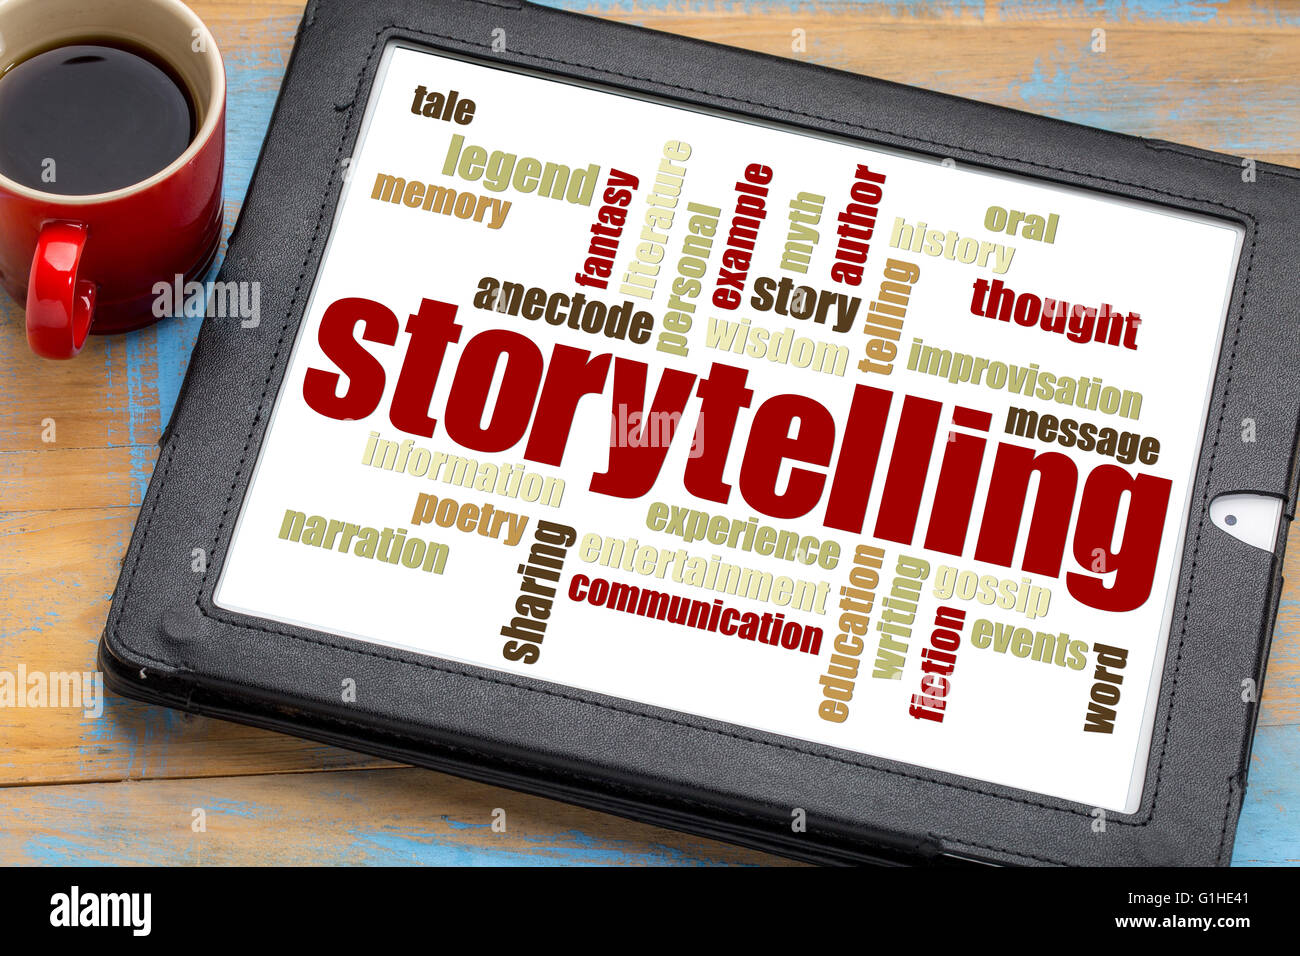 Storytelling-Wortwolke auf digitale Tablett mit einer Tasse Kaffee Stockfoto